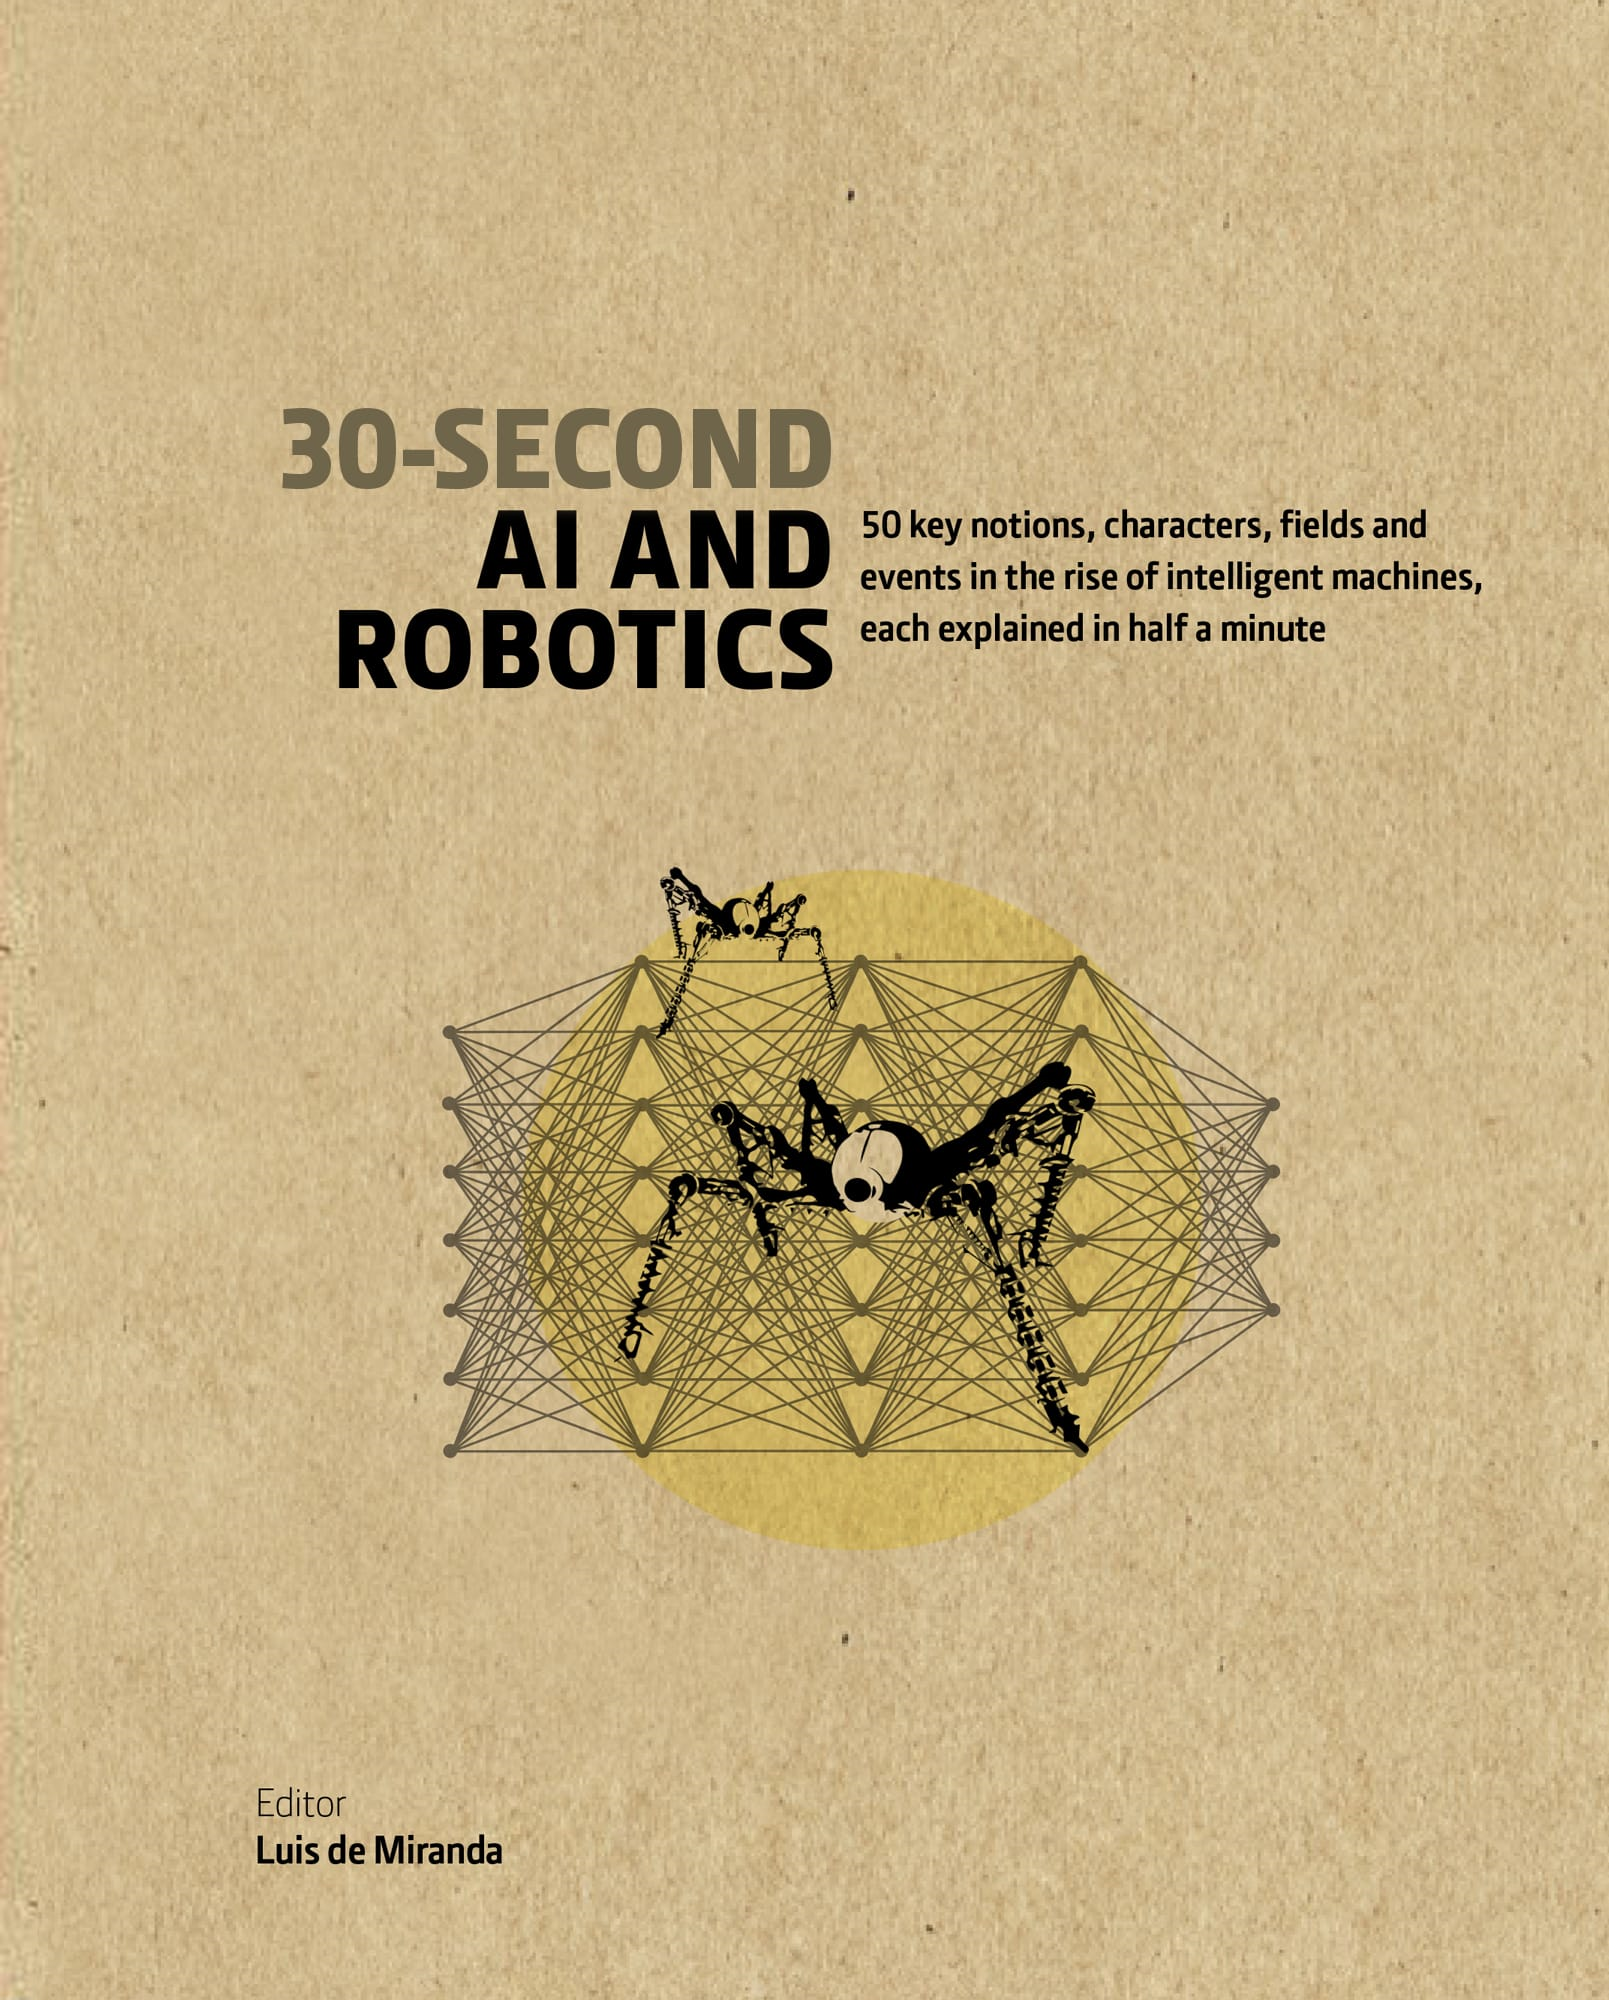 30-second AI and robotics